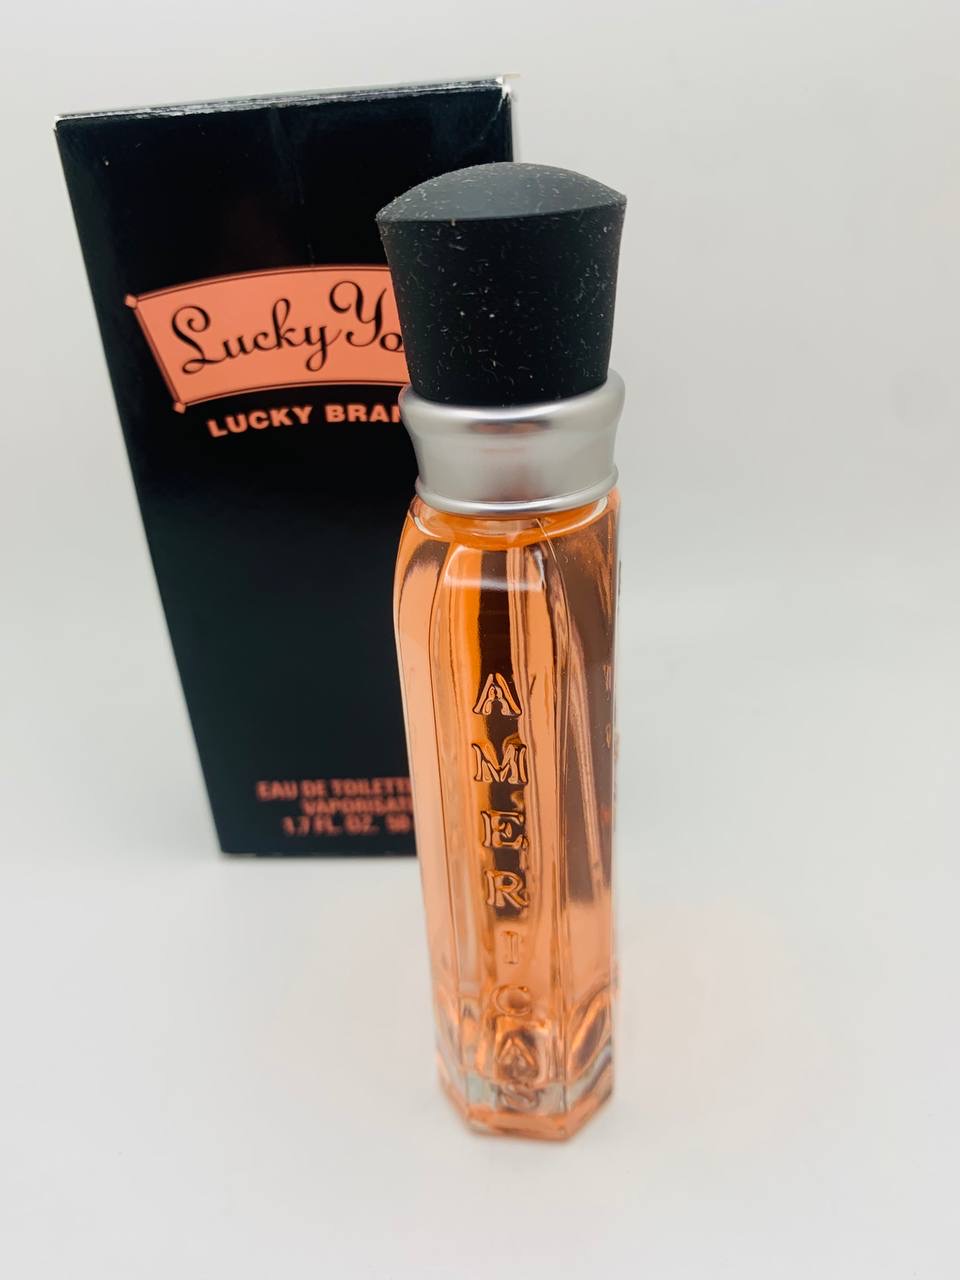 Lucky brand women’s perfume